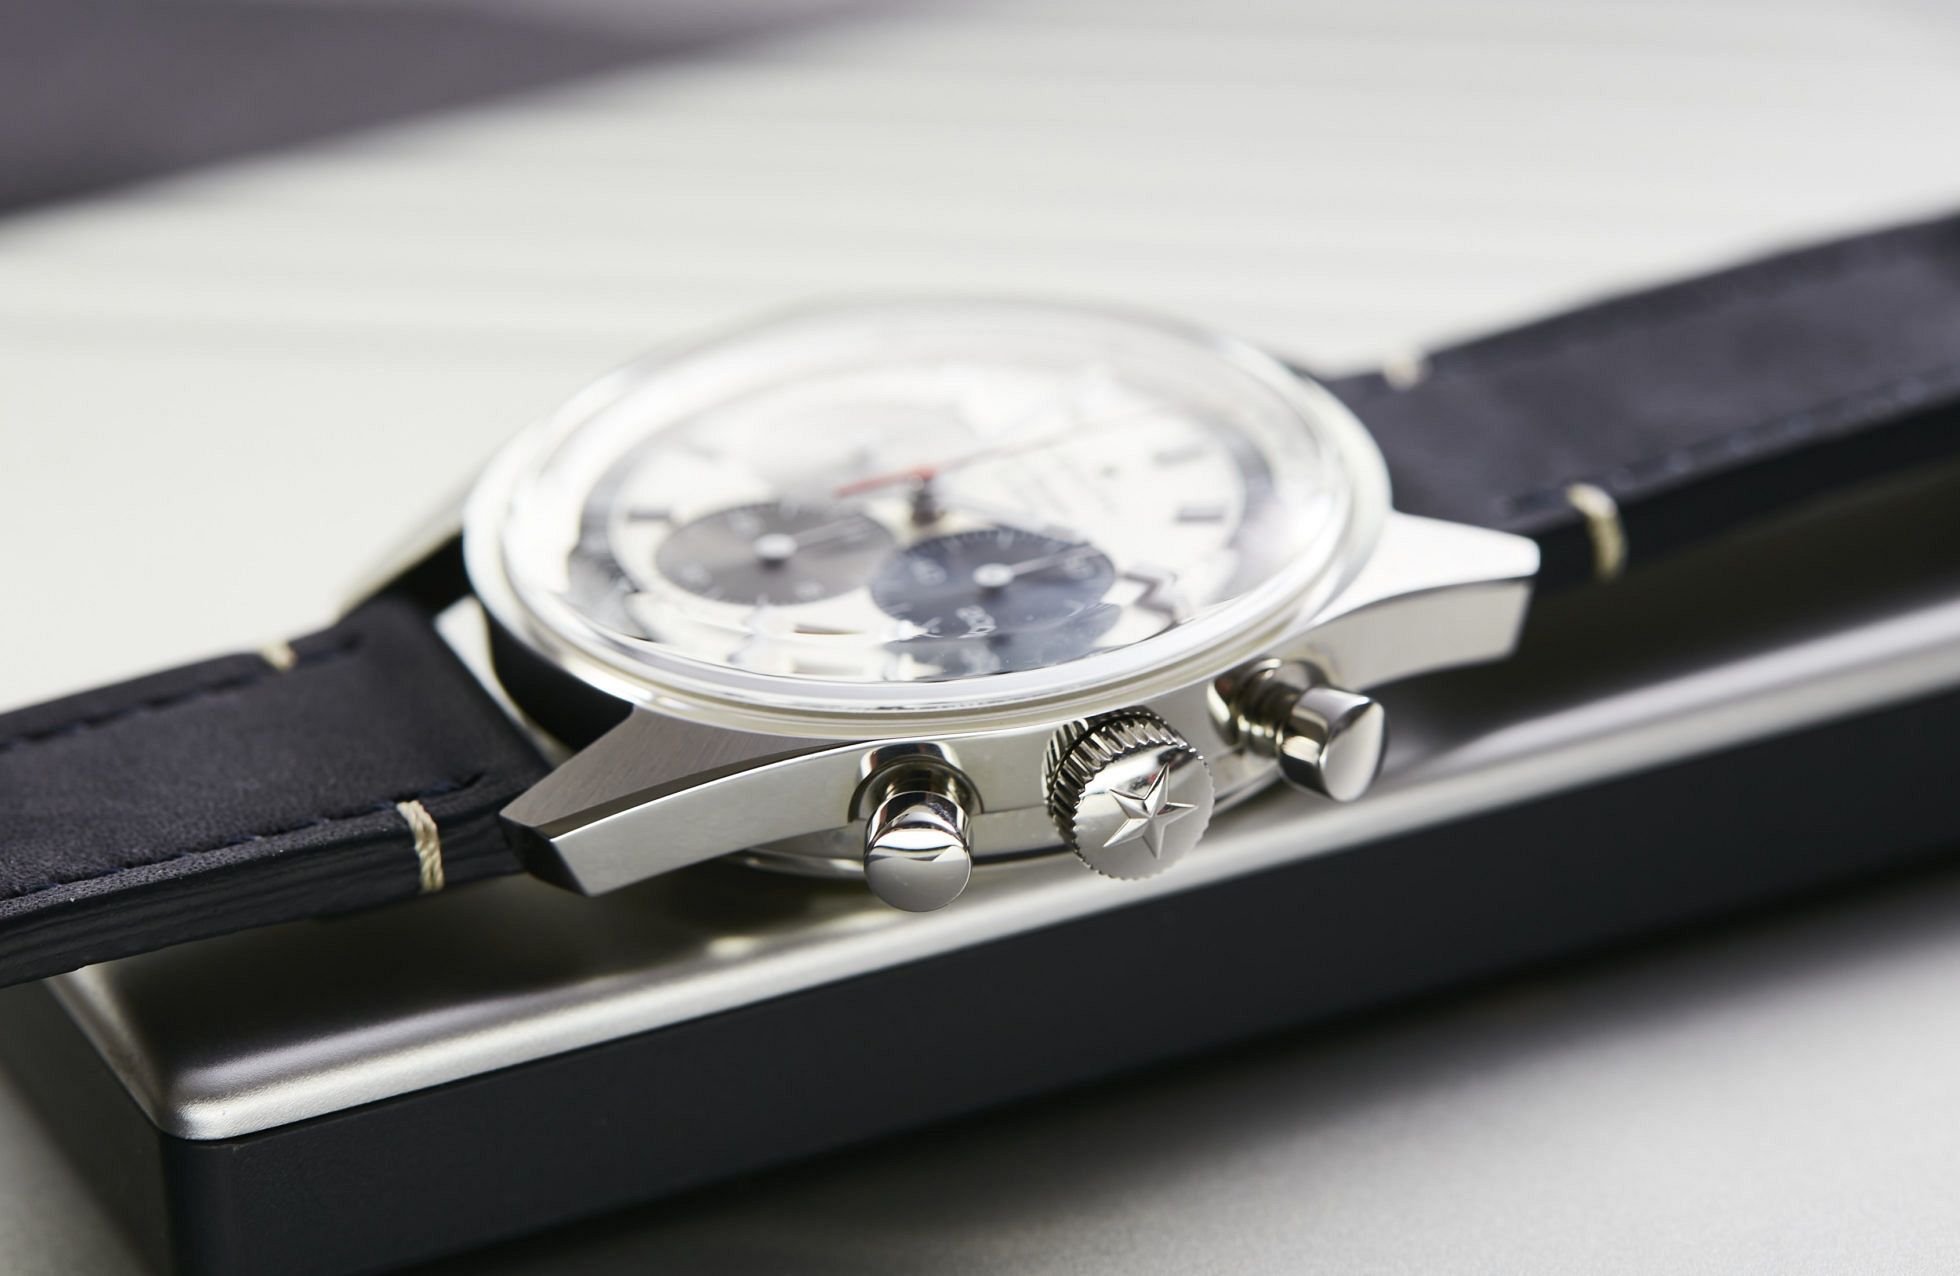 The Zenith Chronomaster Original White is a chronograph classic